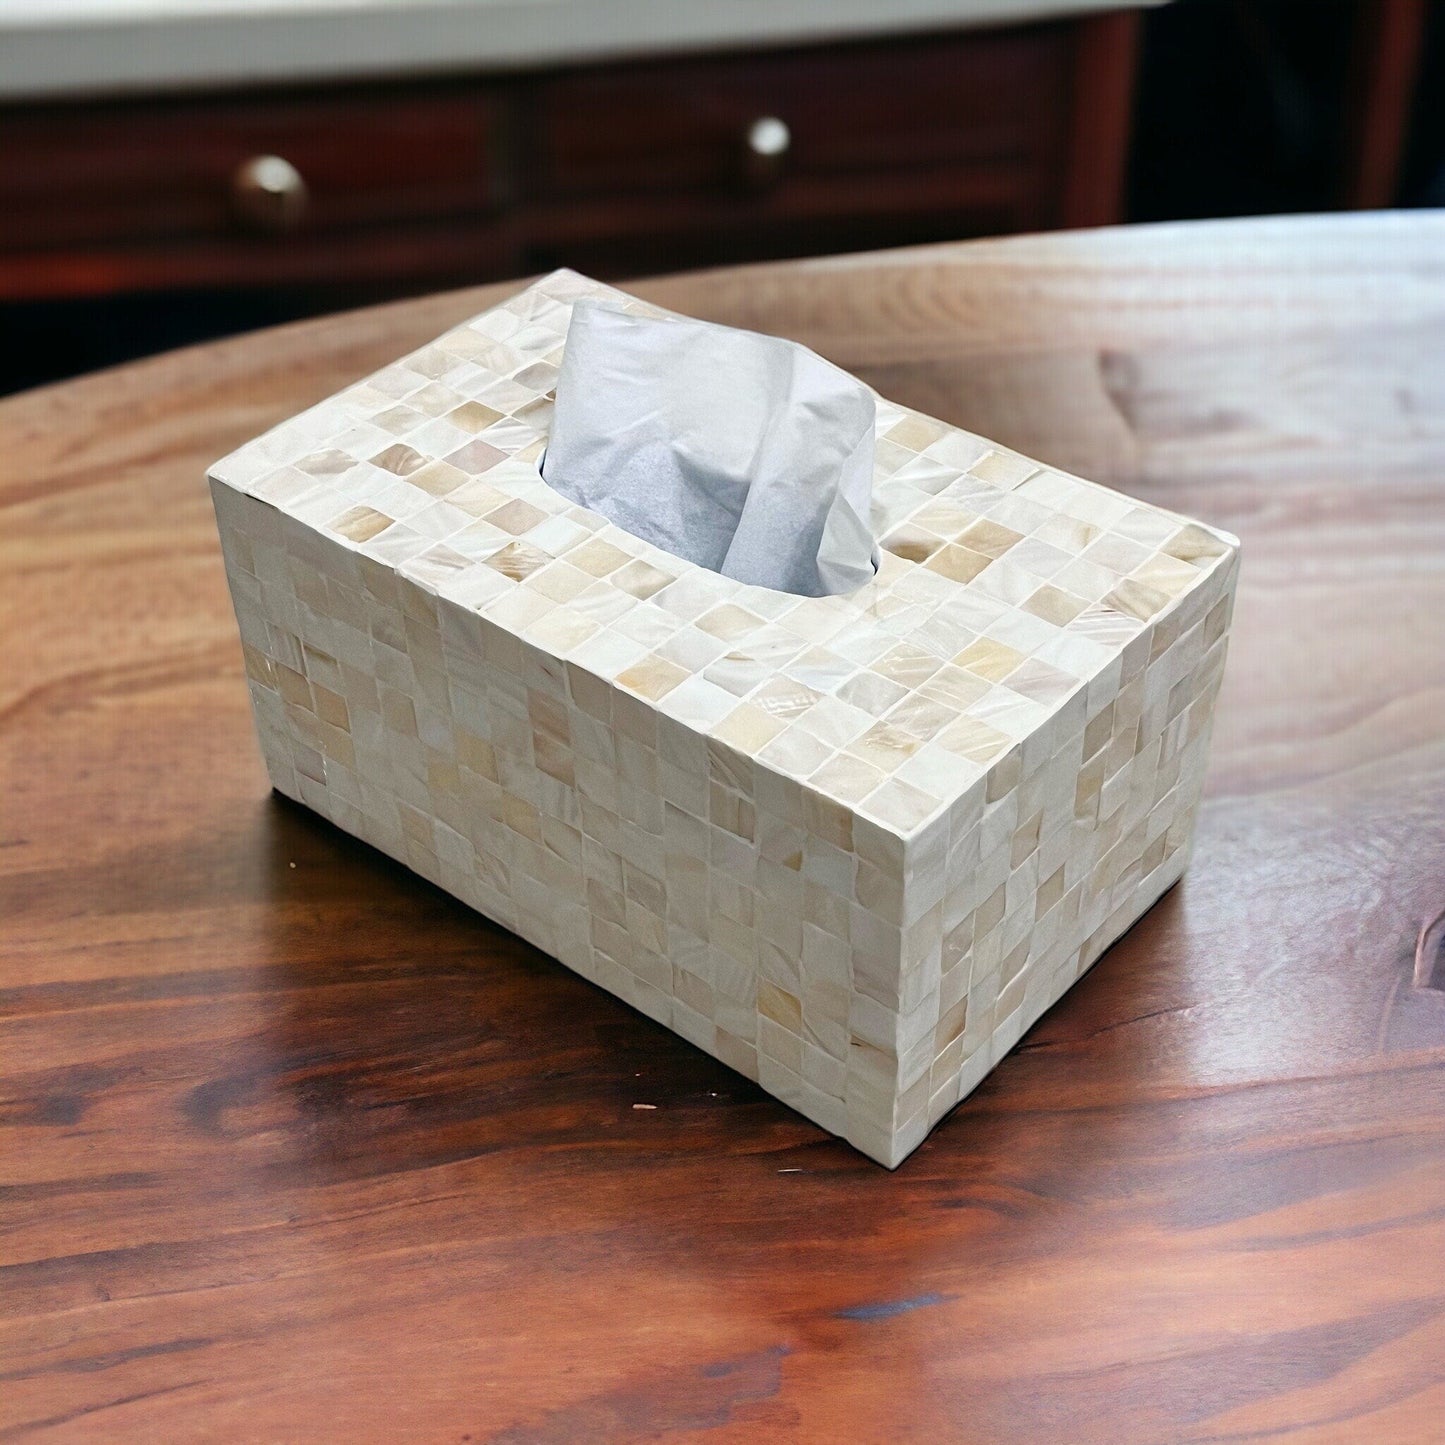 Mother pearl tissue box white mosaic pattern, square cube tissue holder, luxurious tissue box cover, nacre tissue box, napkin case holderPremiumWoodArtRectangular